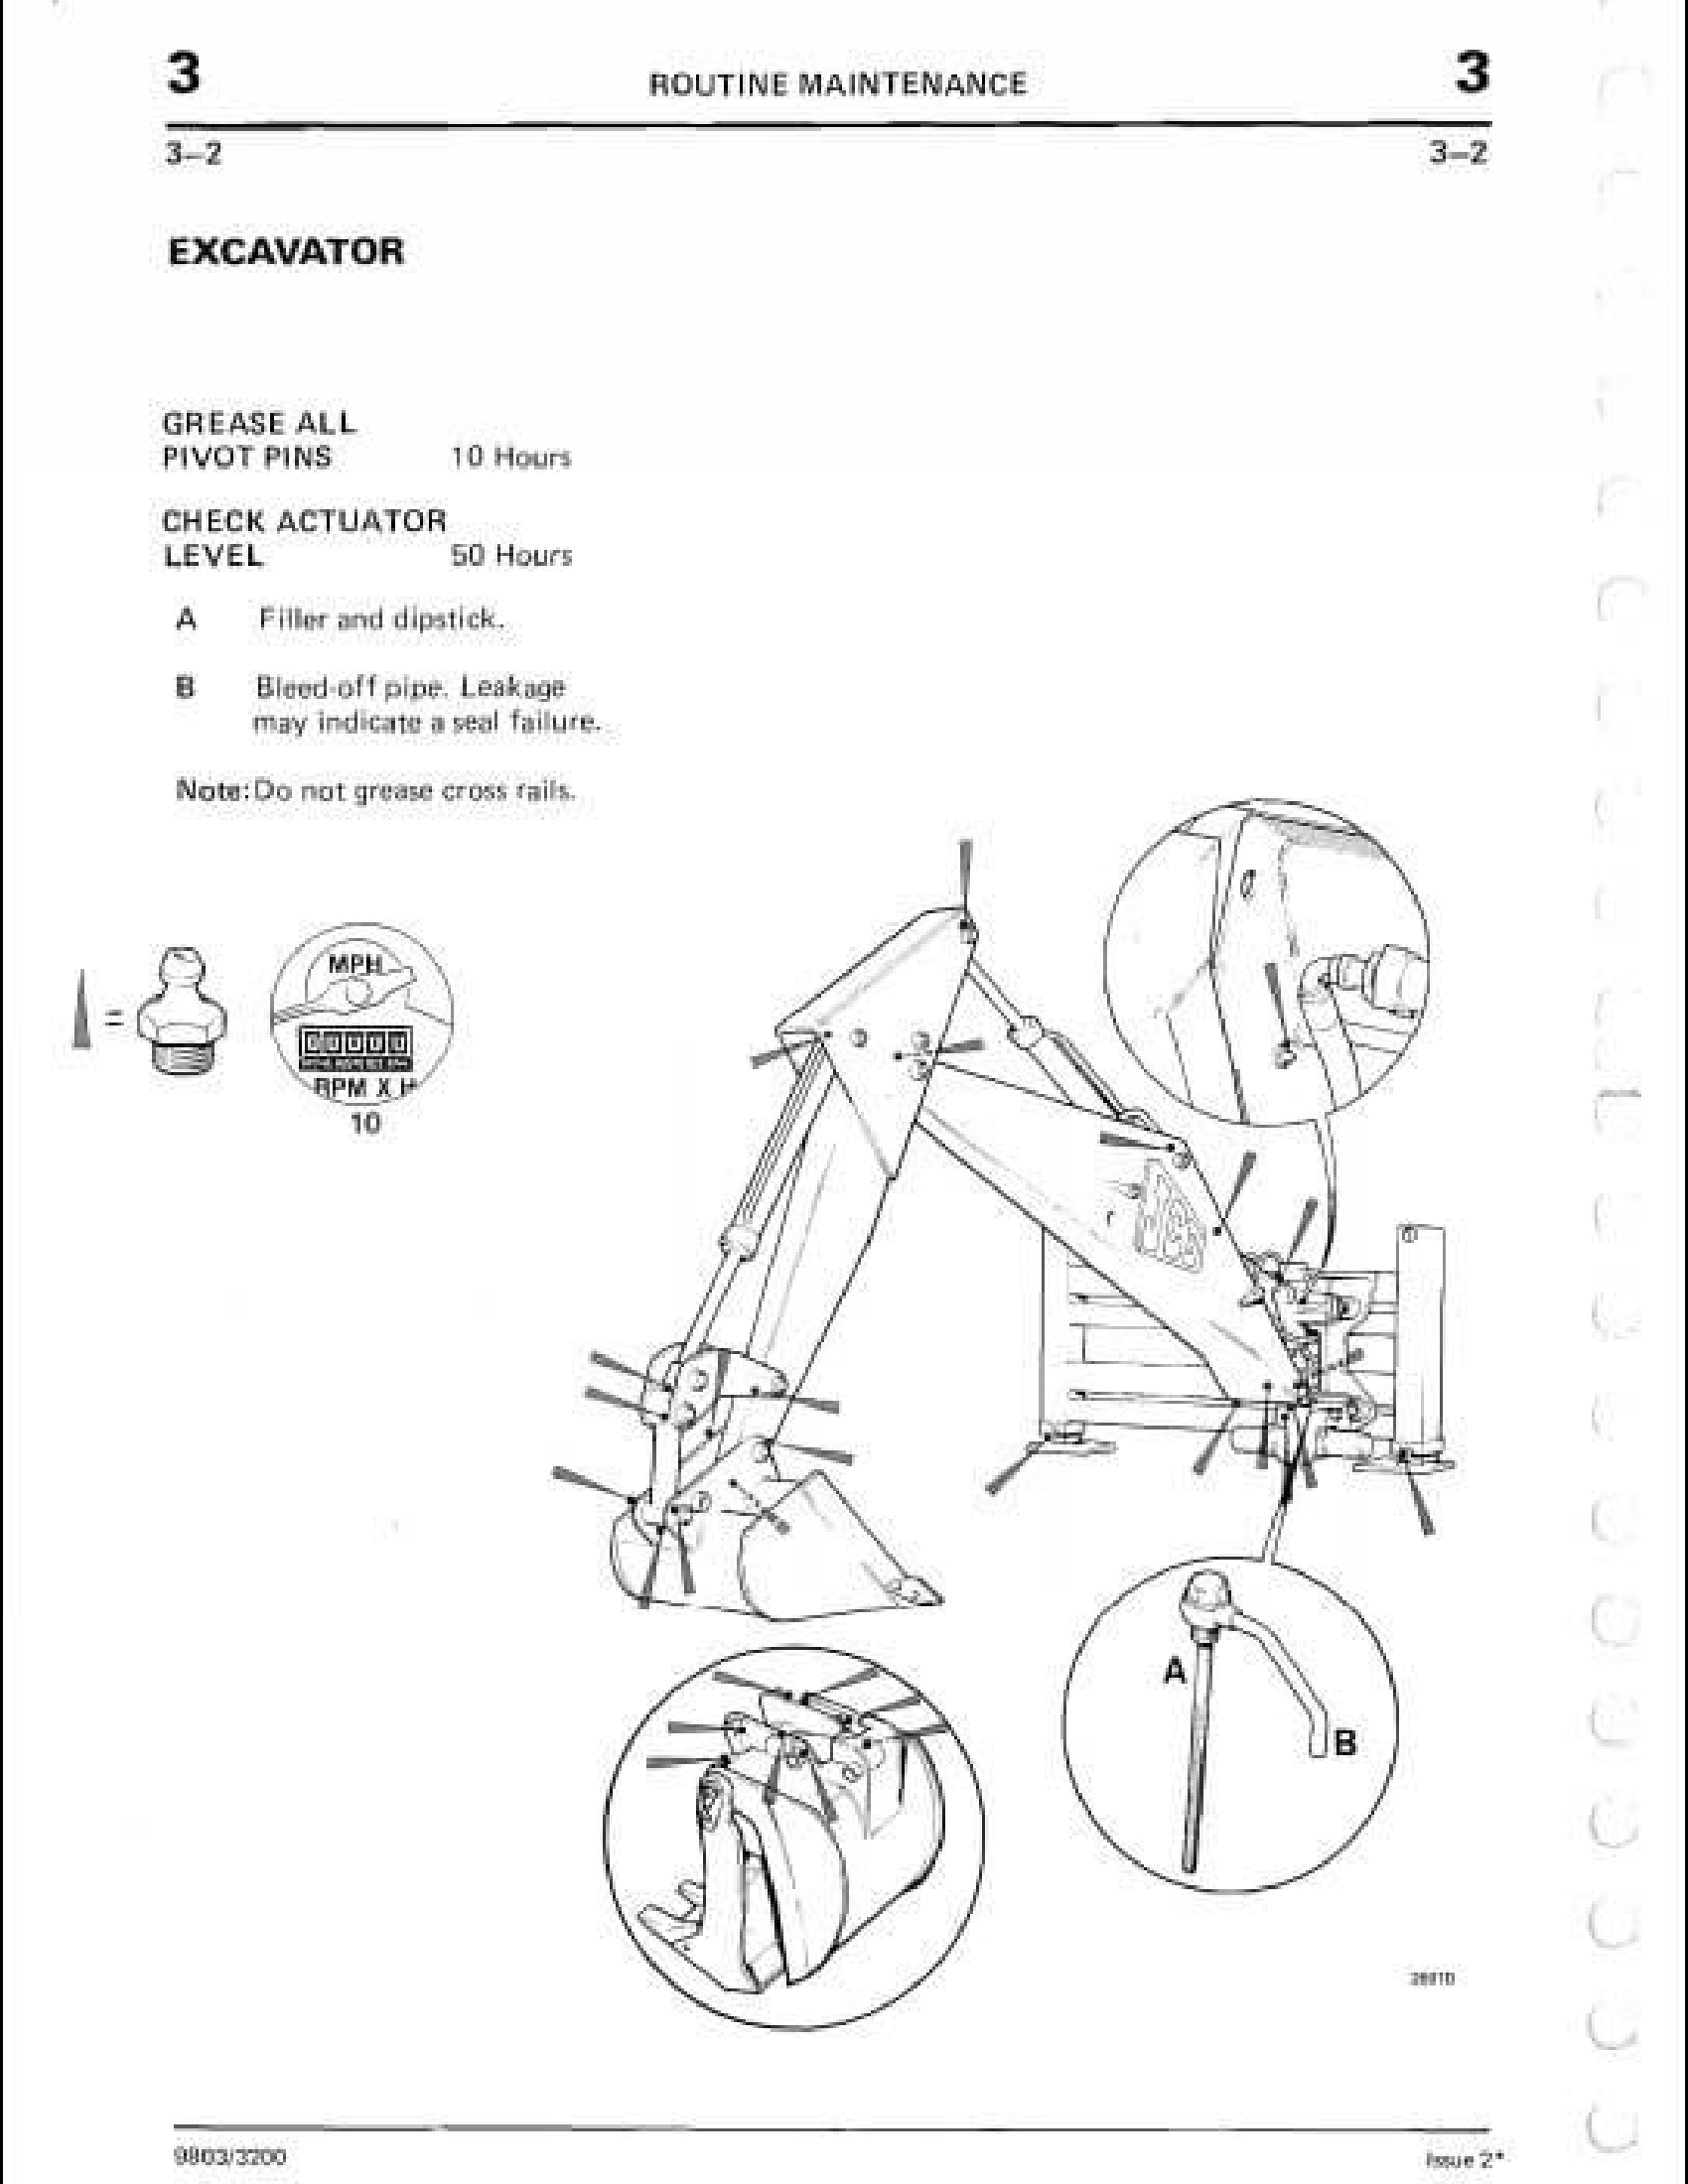 JCB 4 Series Excavator Loader Parts manual